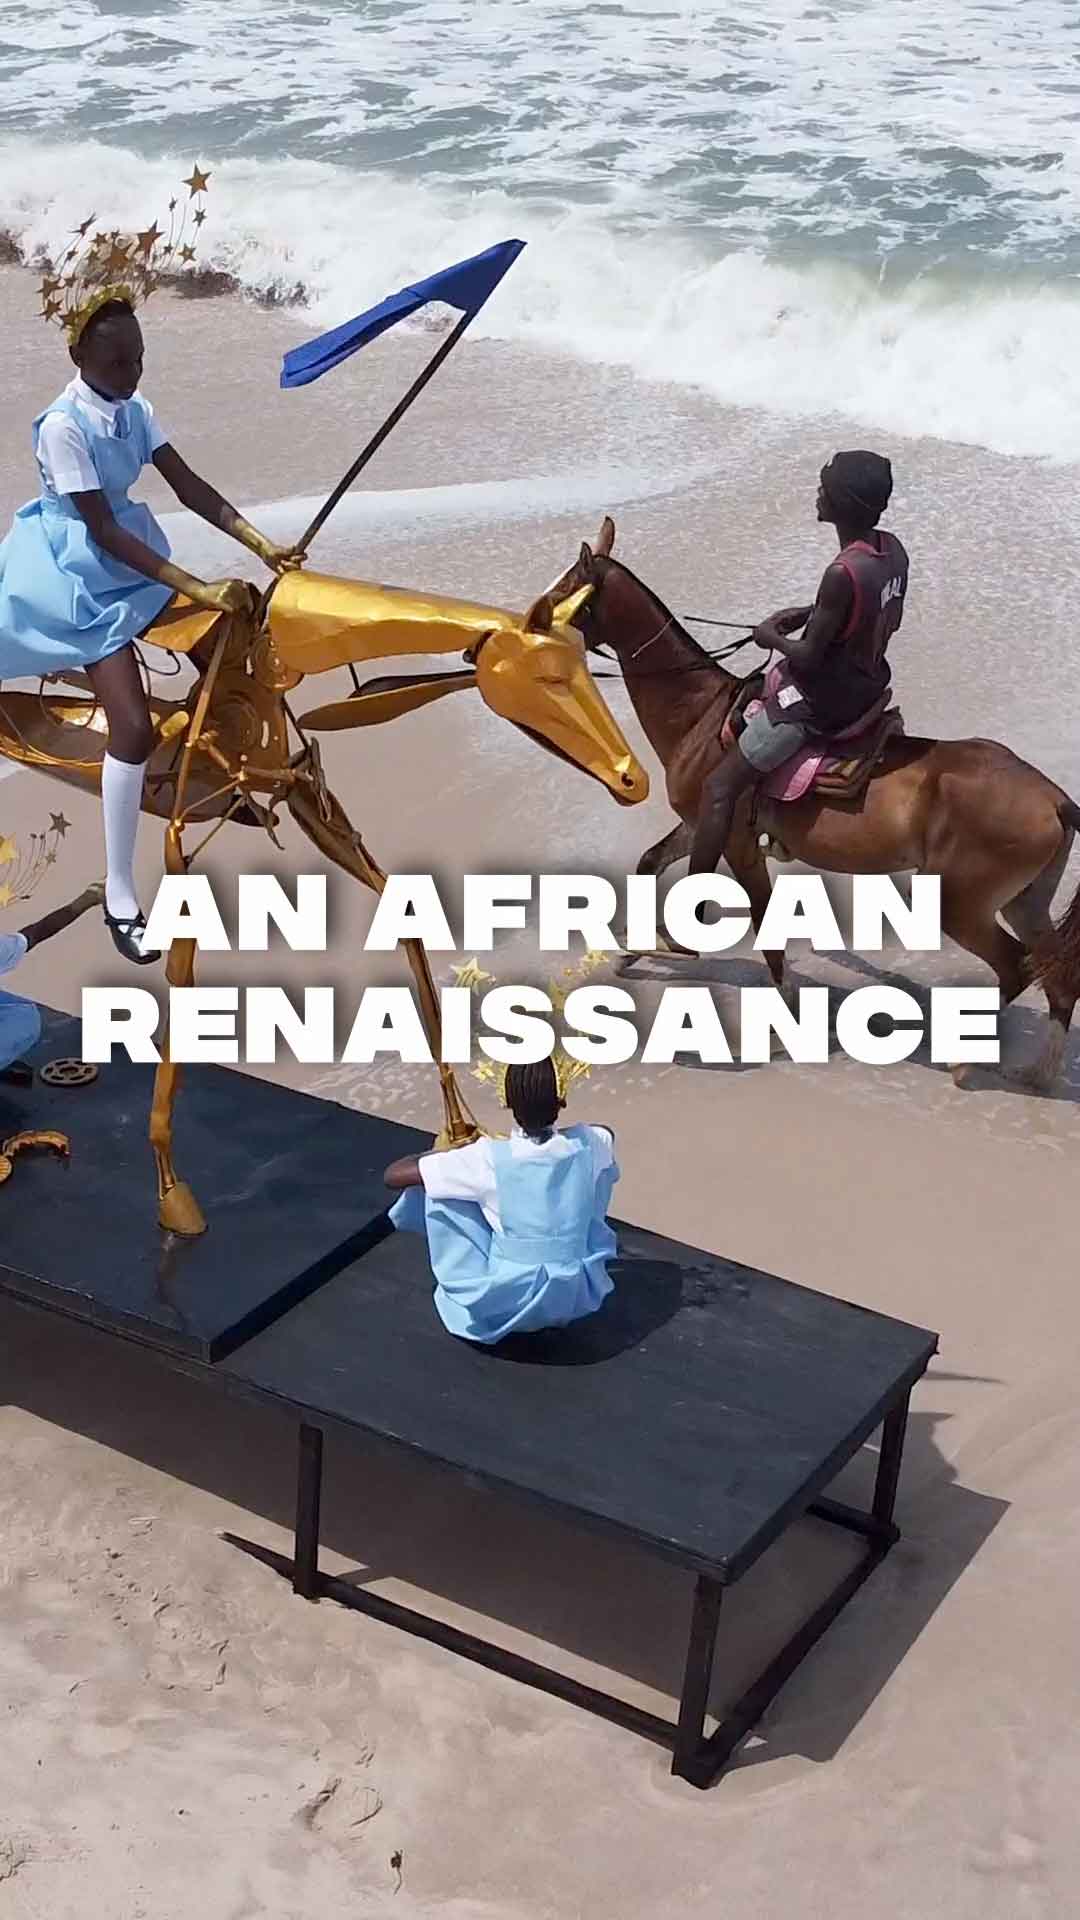 00_lc-teaser-ig_african_renaissance_15sec_9x16.mp4.00_00_03_00.immagine001